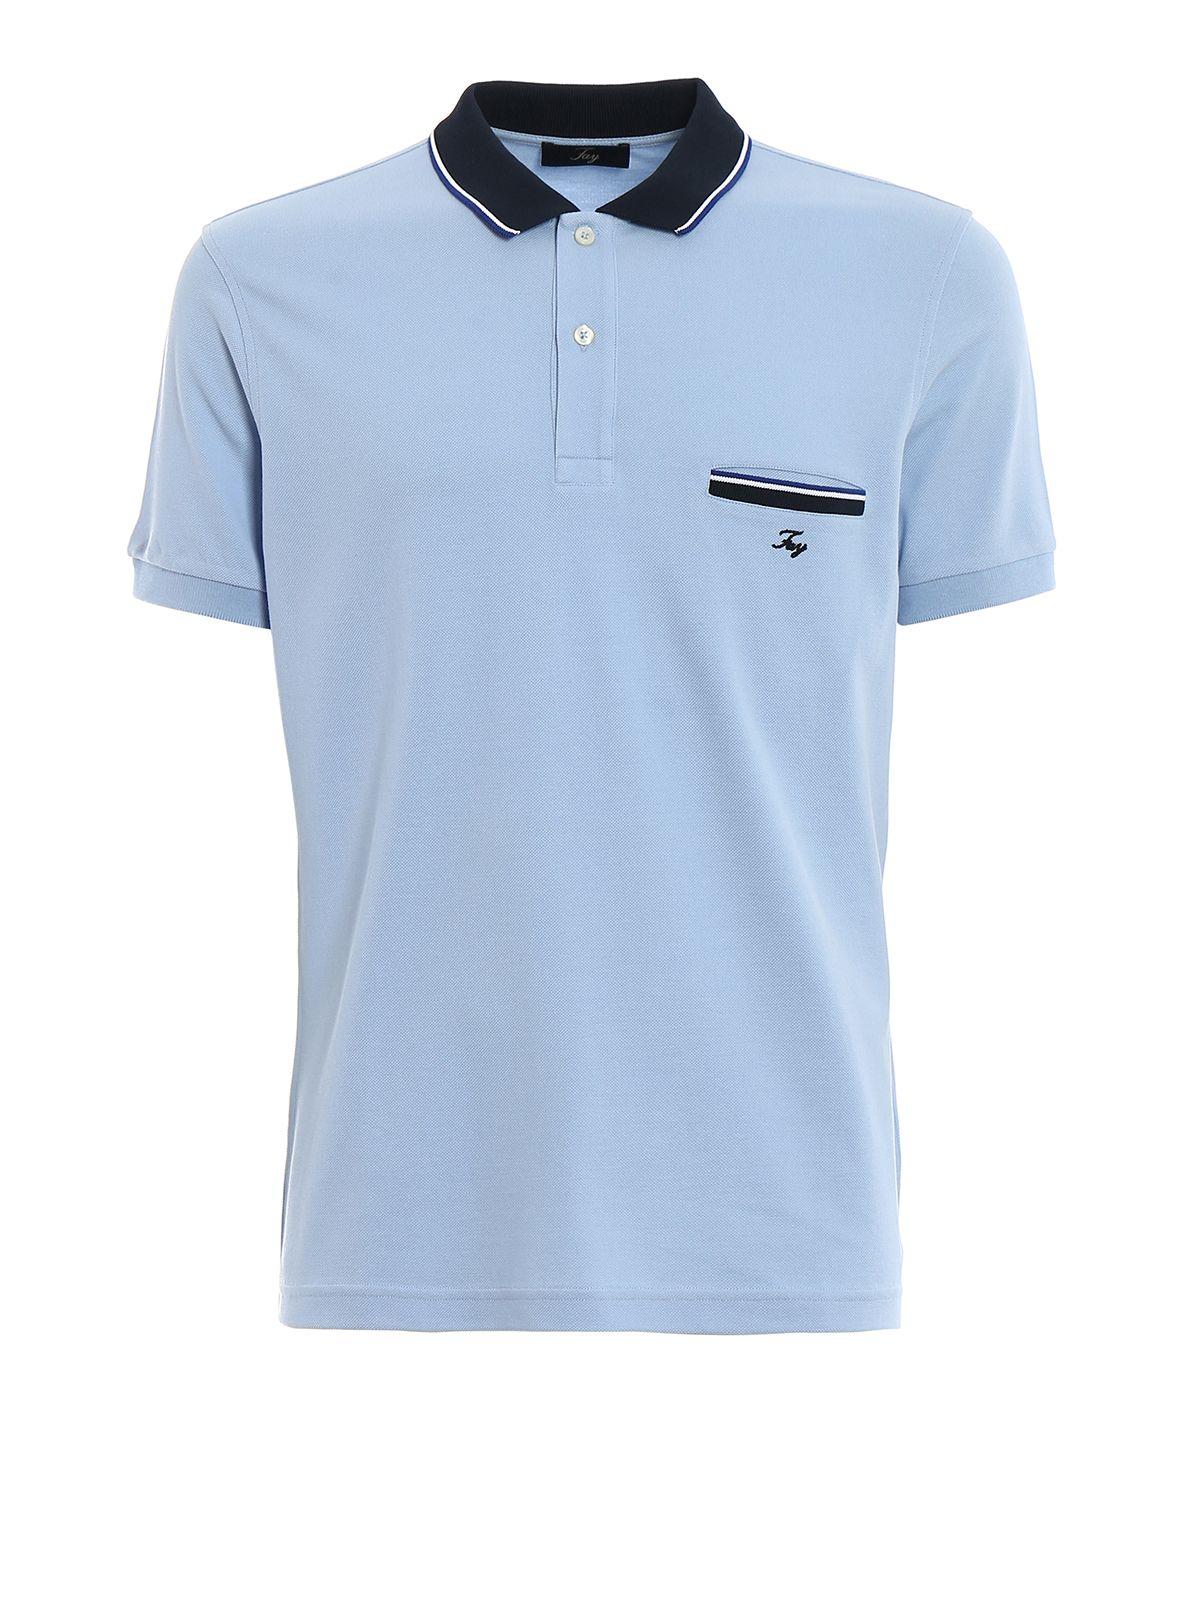 Light Blue Polo Logo - Fay blue polo shirt with pocket shirts